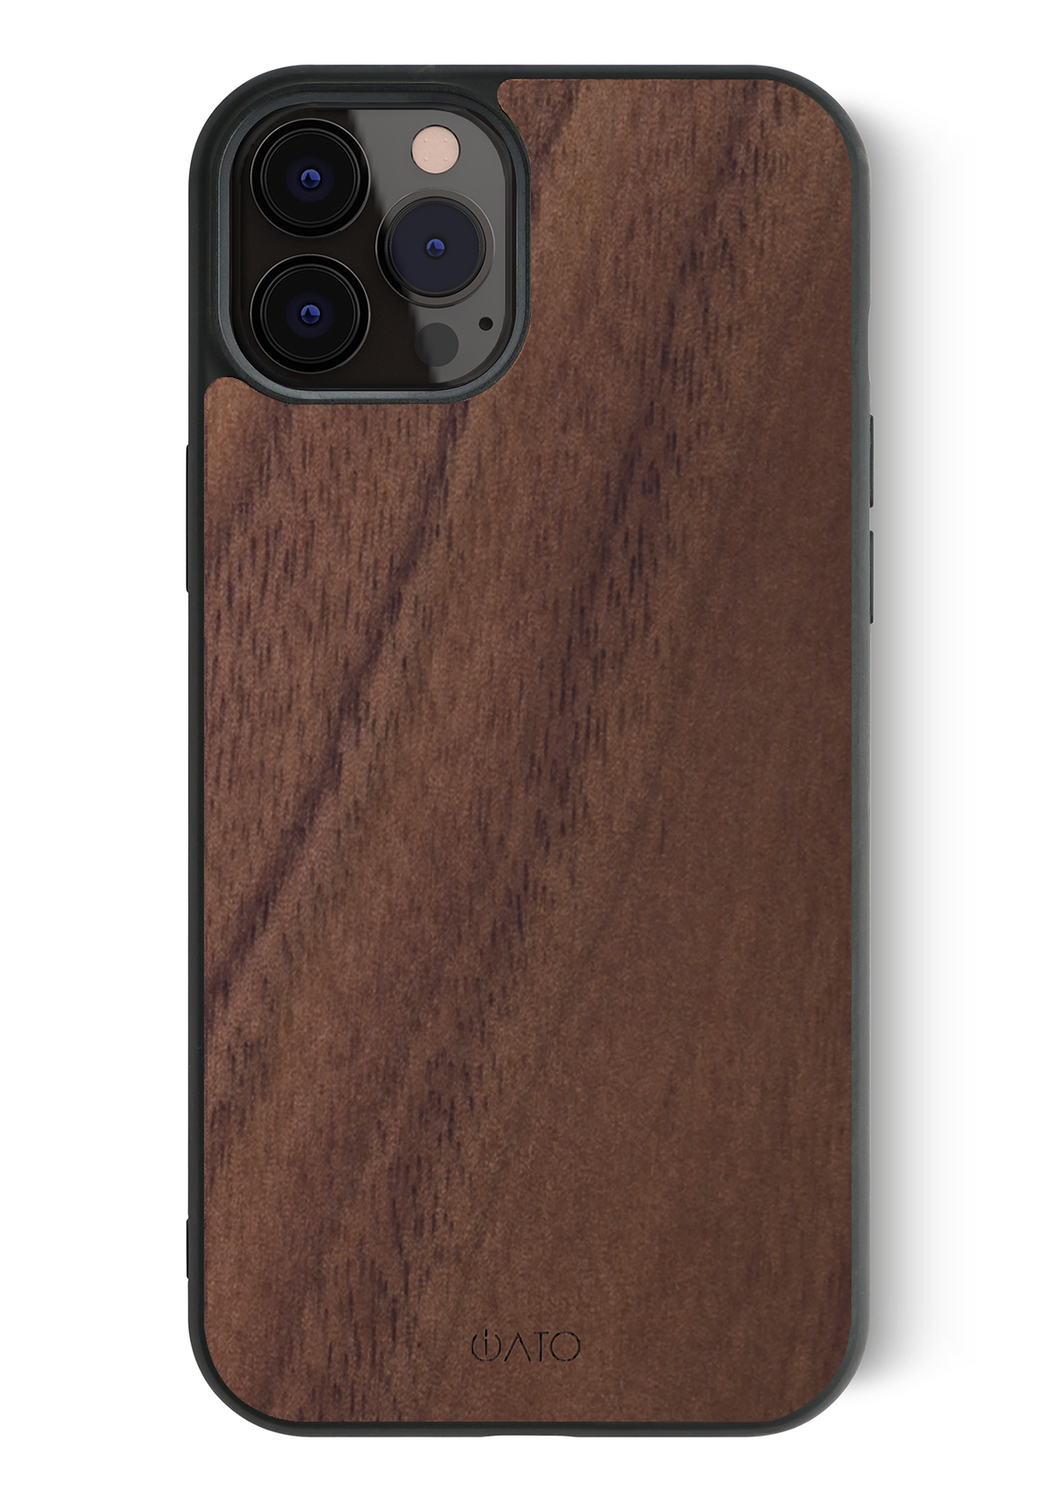 iPhone 12 & 12 Pro - iATO Walnut Wood Case - Protective Design. - iATO Awesome